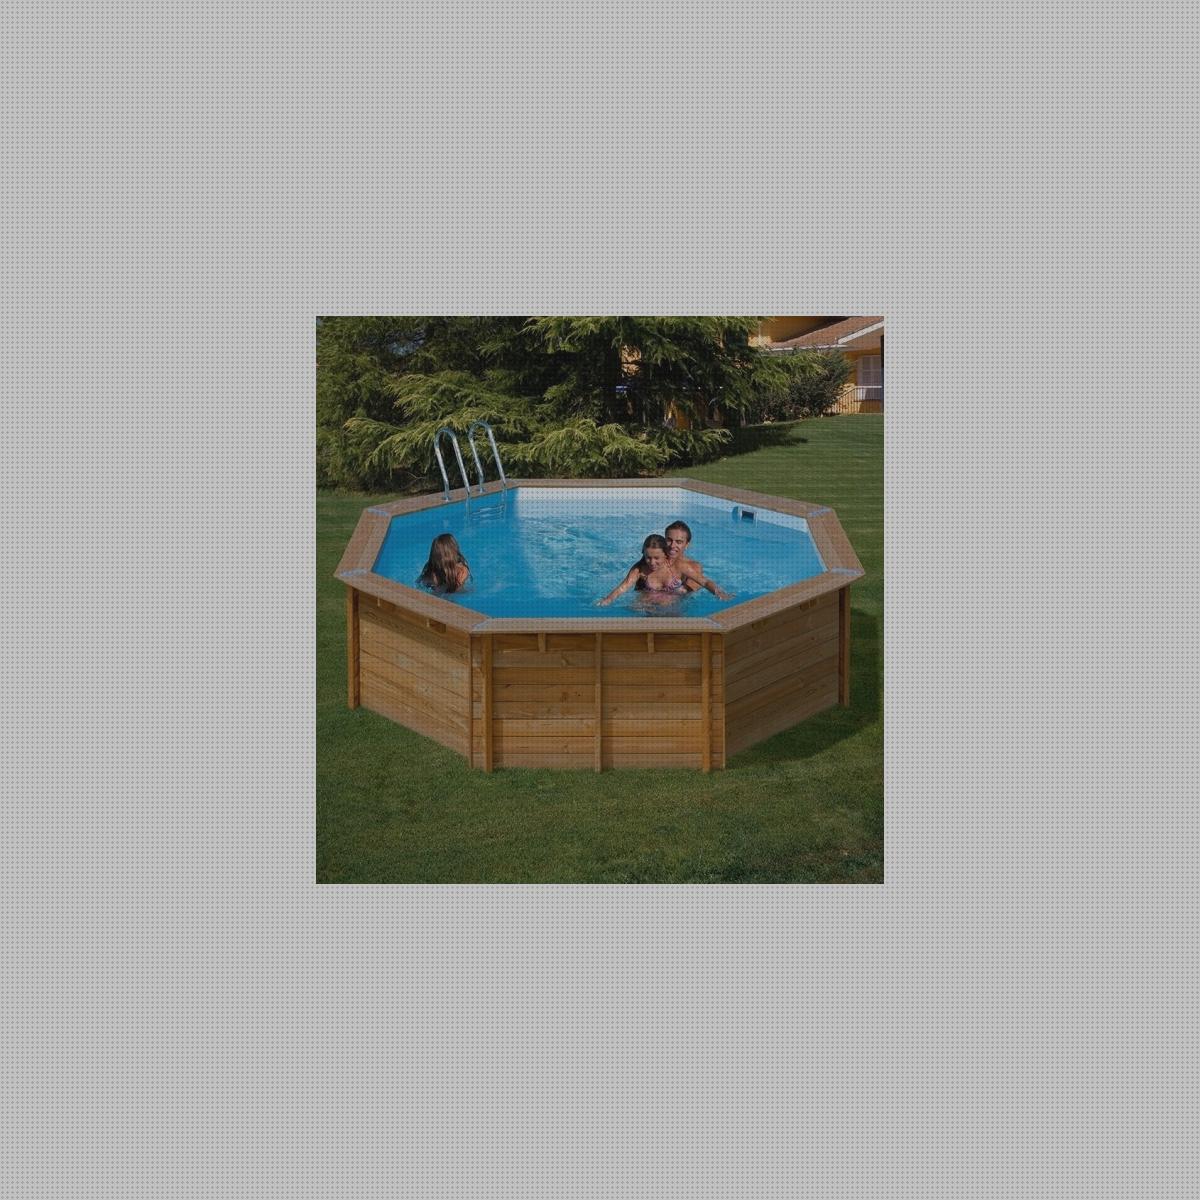 Review de piscina redonda desmontable de madera